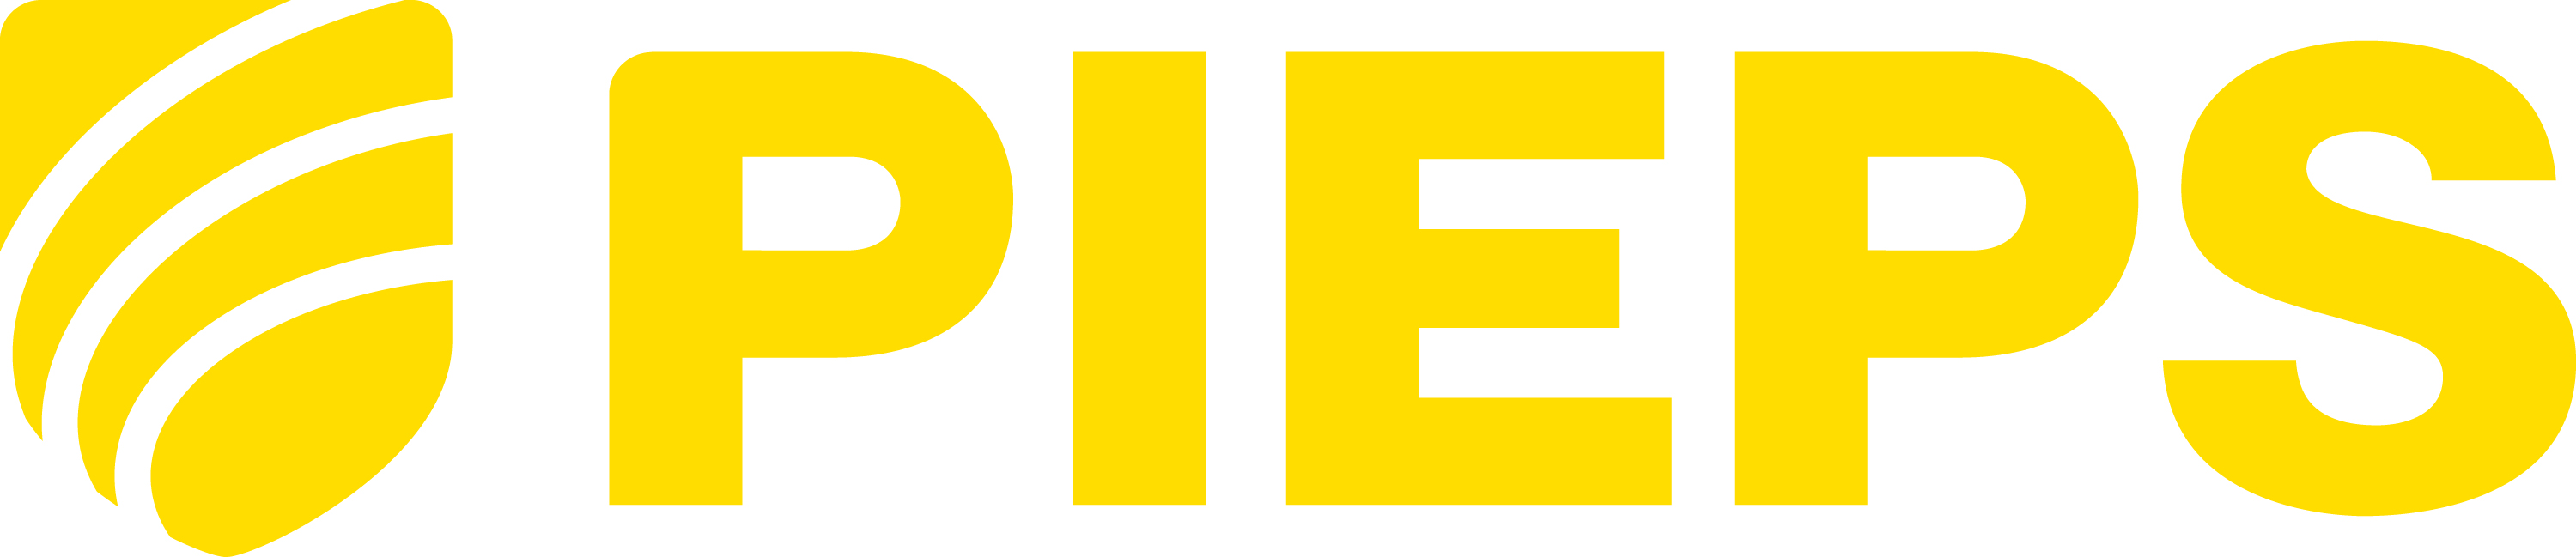 Pieps Logo